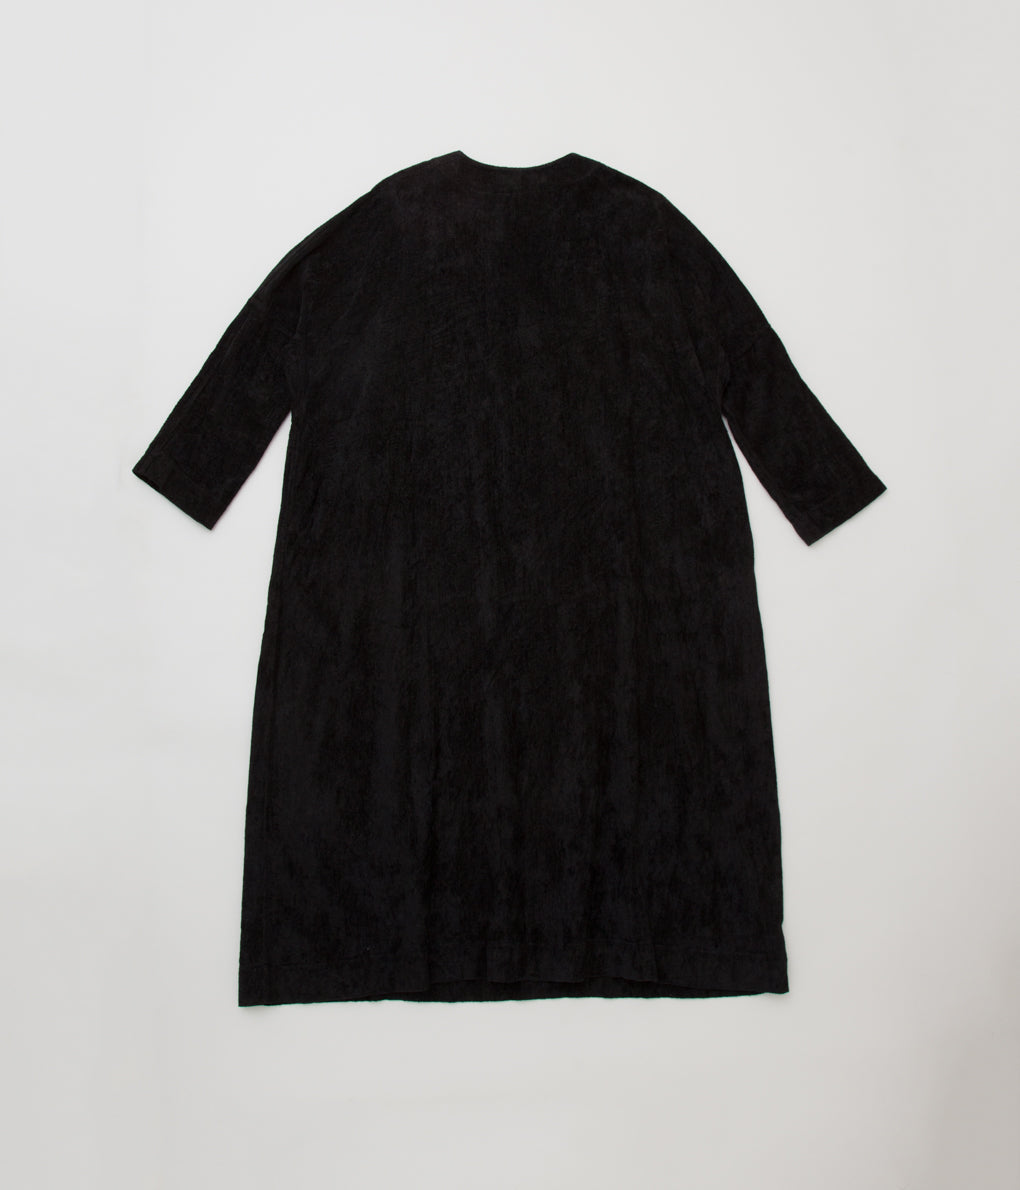 BEAUGAN "VELVET SACK DRESS"(INDIGO MUDDYED BLACK)